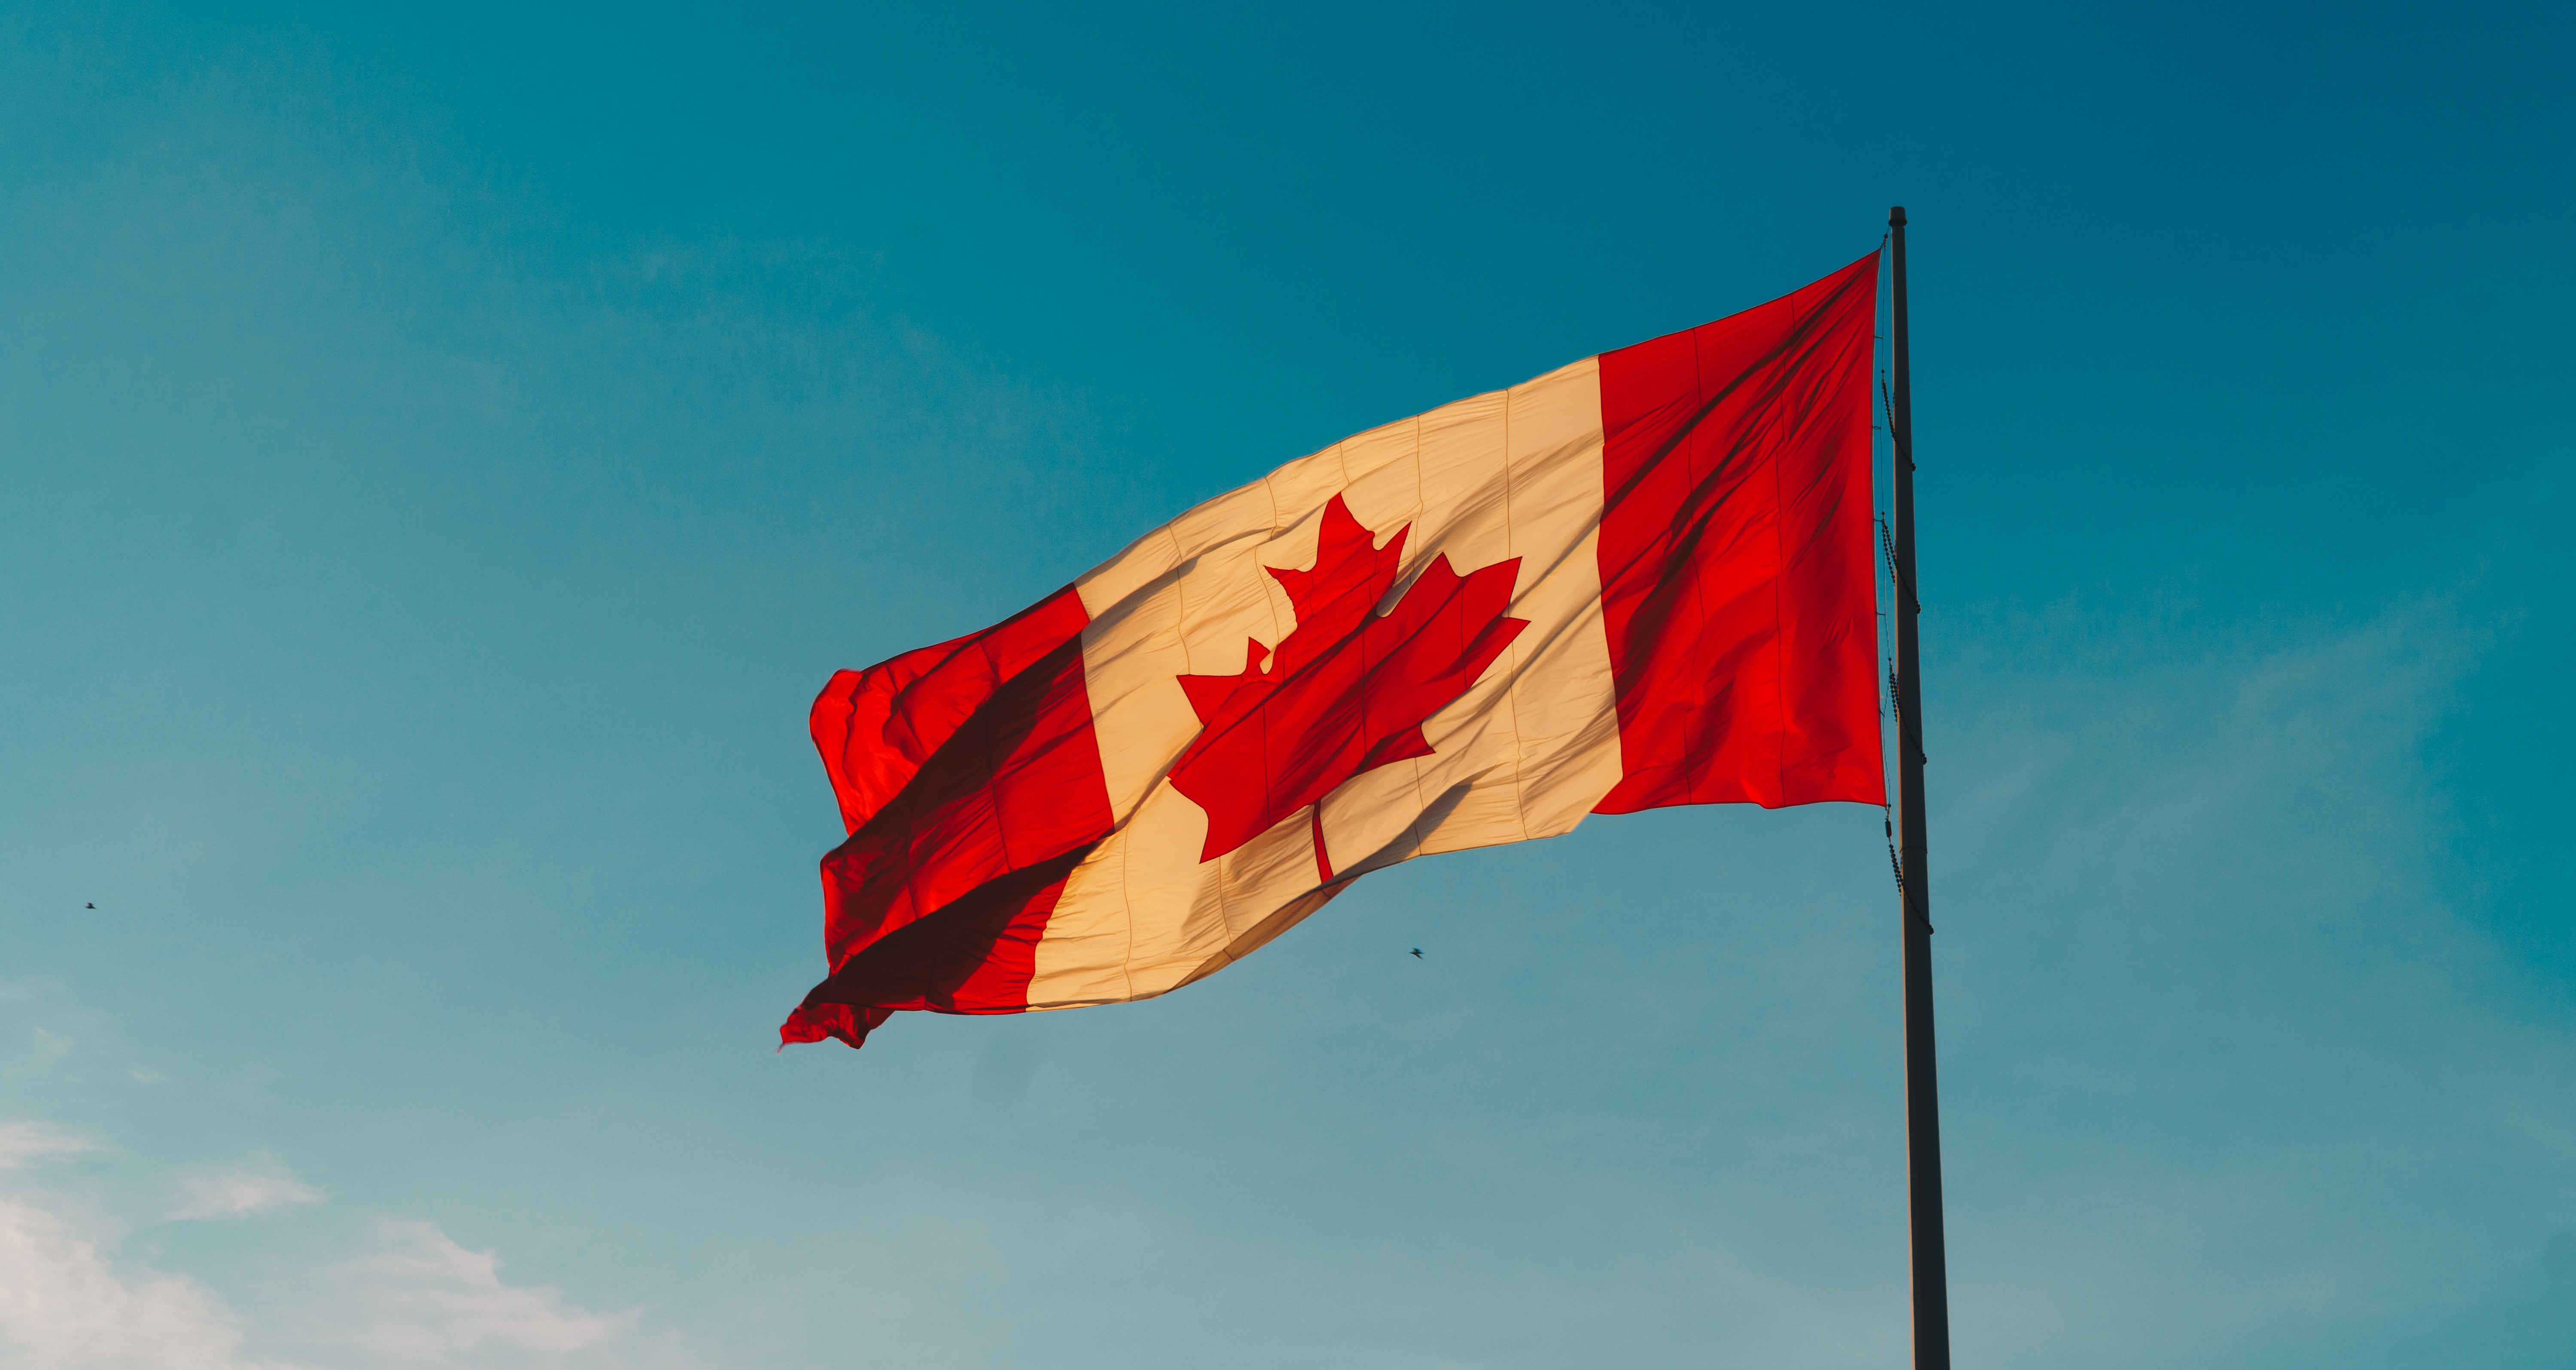 Bandiera canadese - Canadian flag